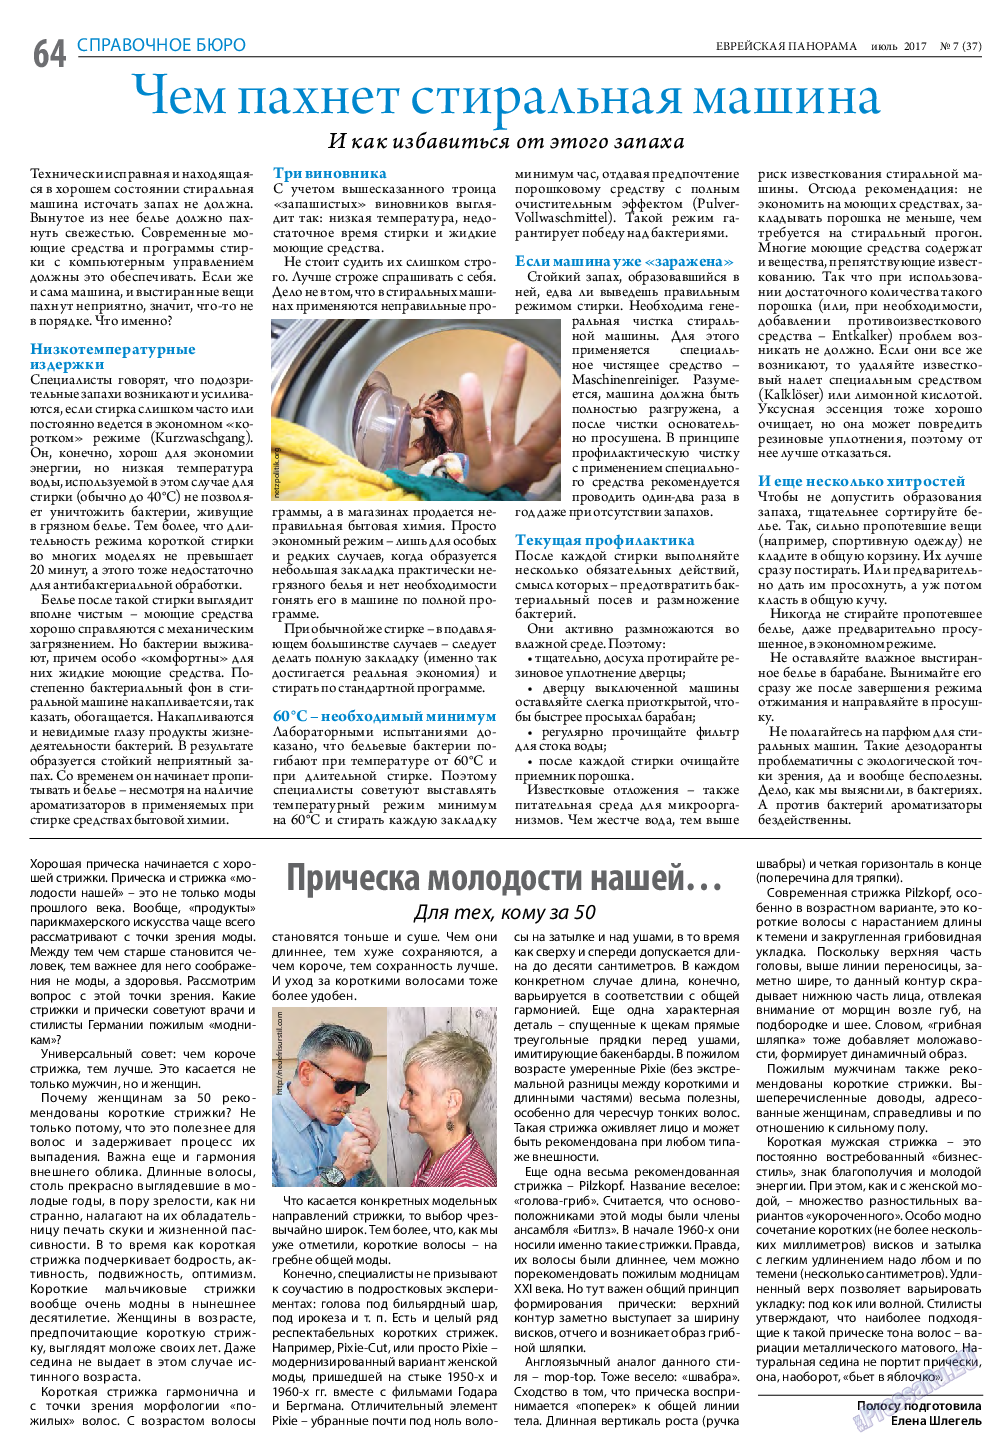 Еврейская панорама, газета. 2017 №7 стр.64